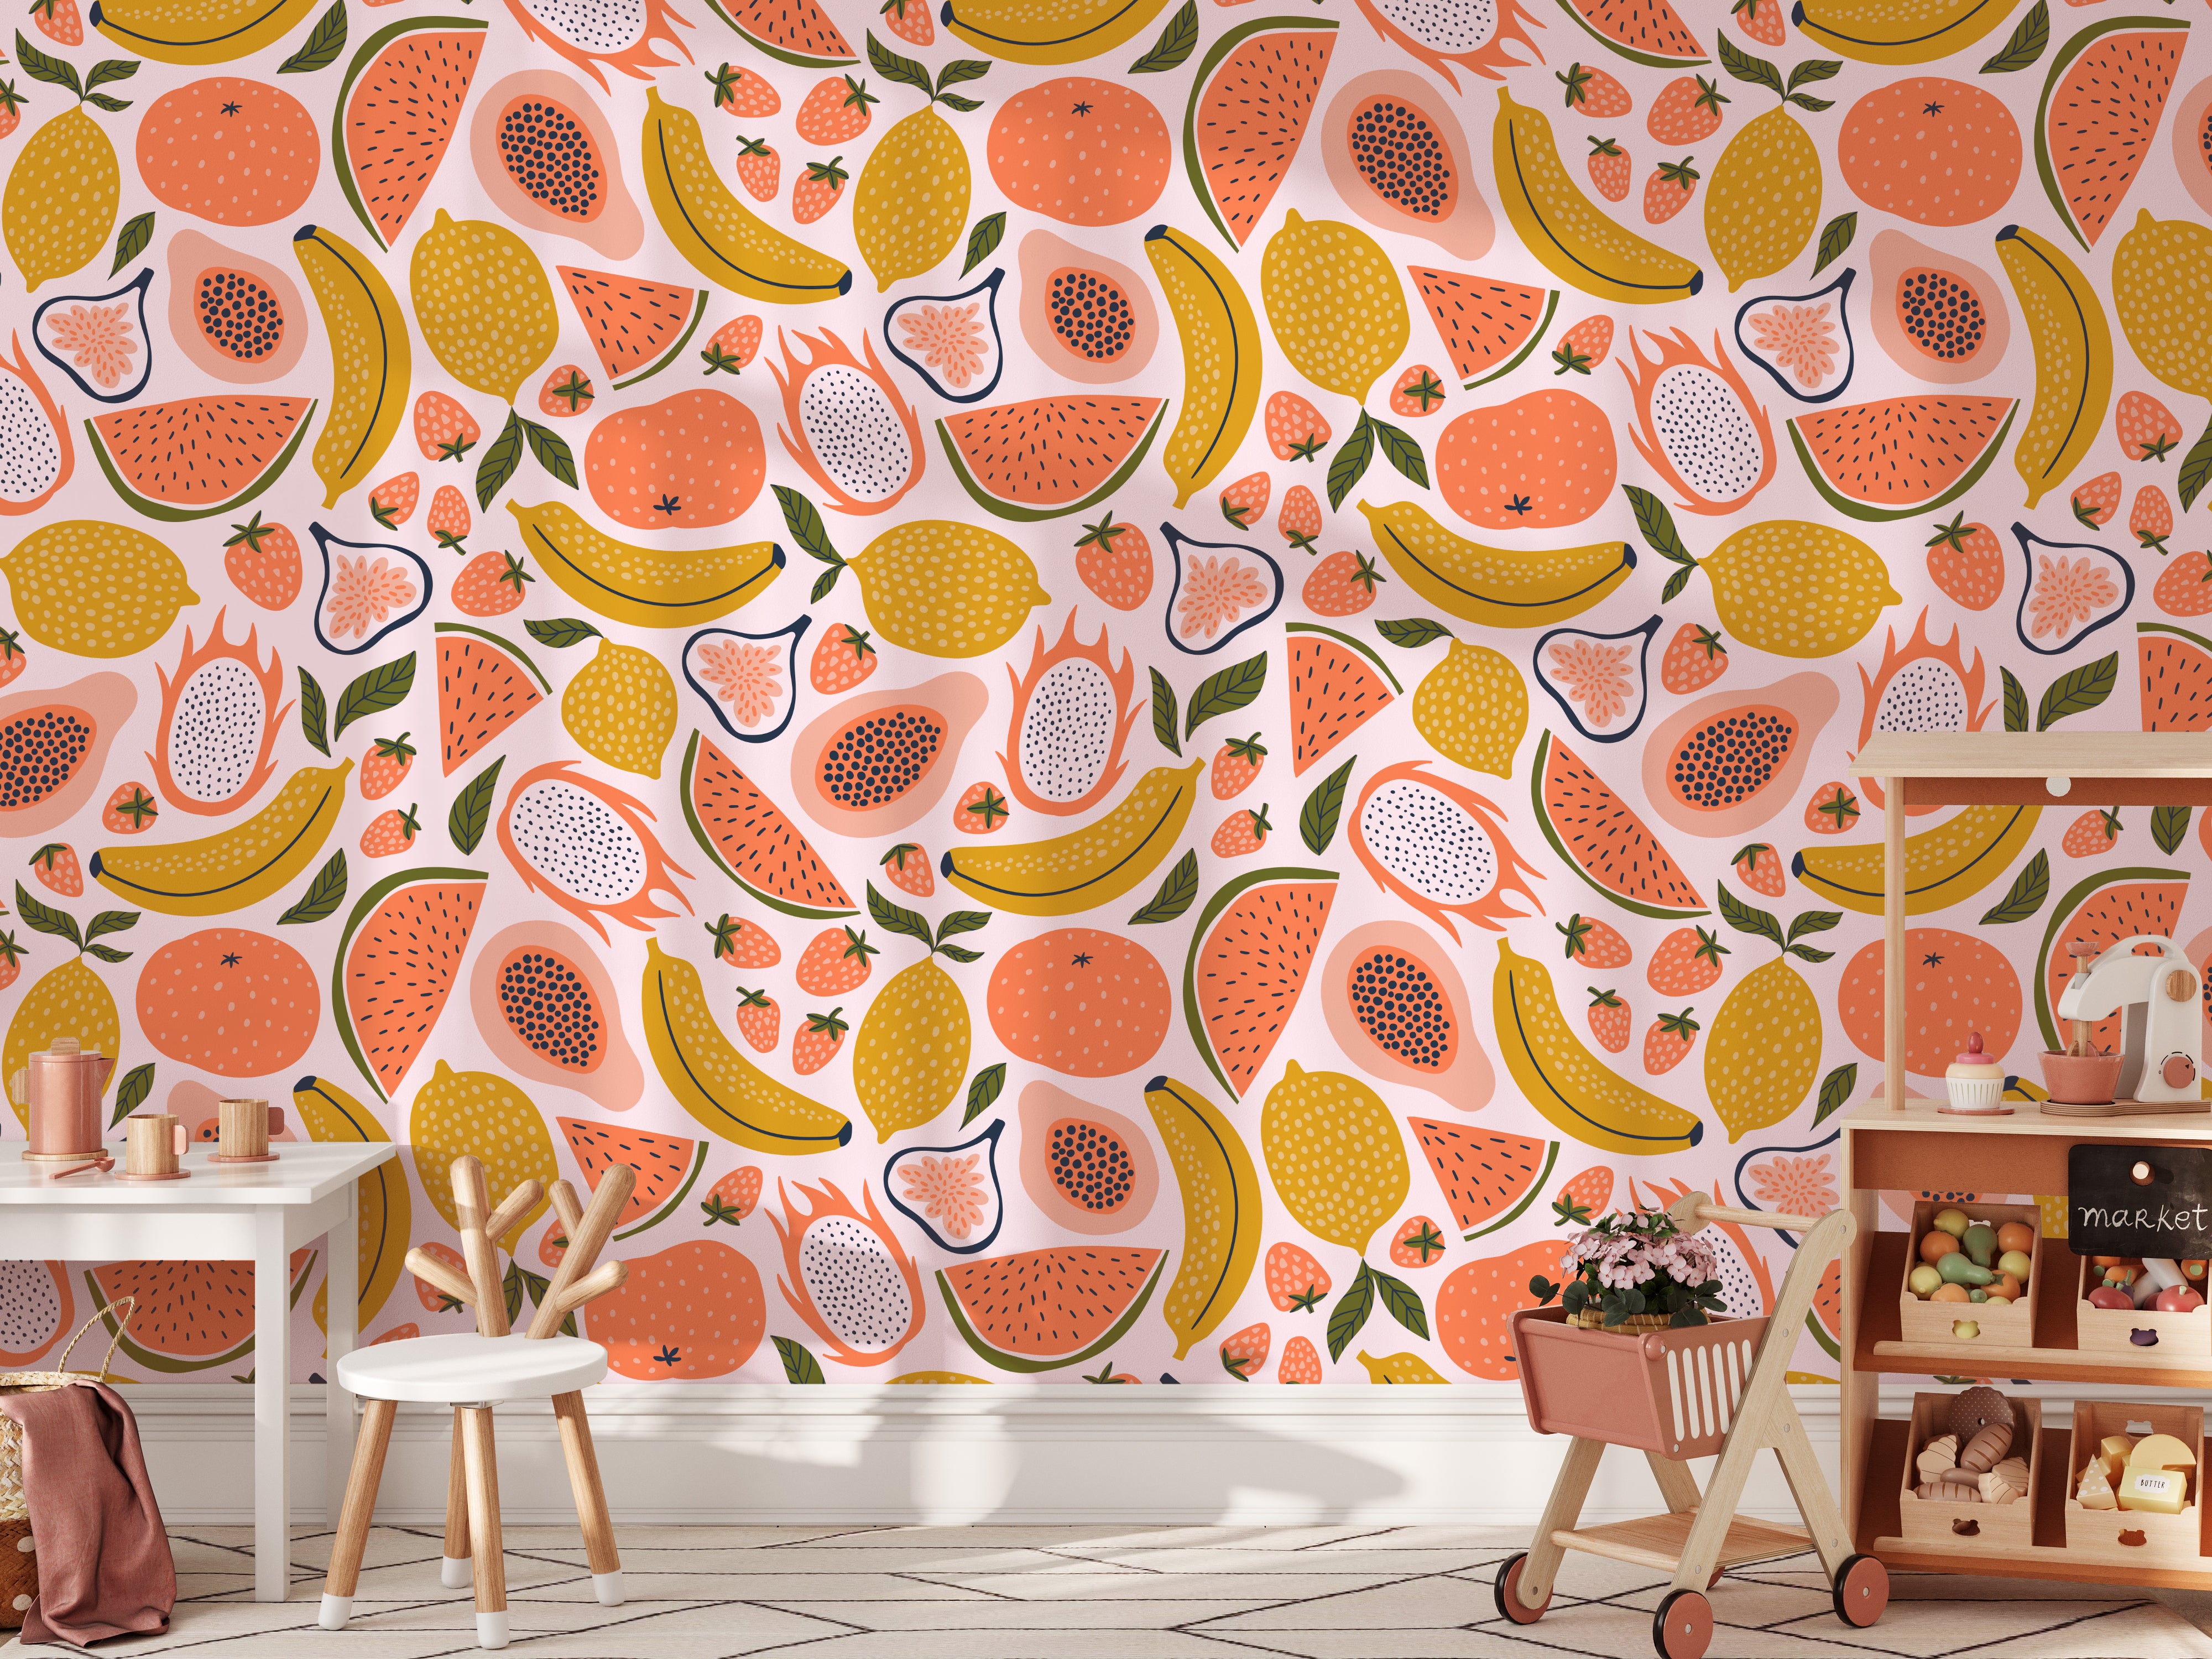 Ambrosia Wallpaper Wallpaper - Wall Blush SG02 from WALL BLUSH